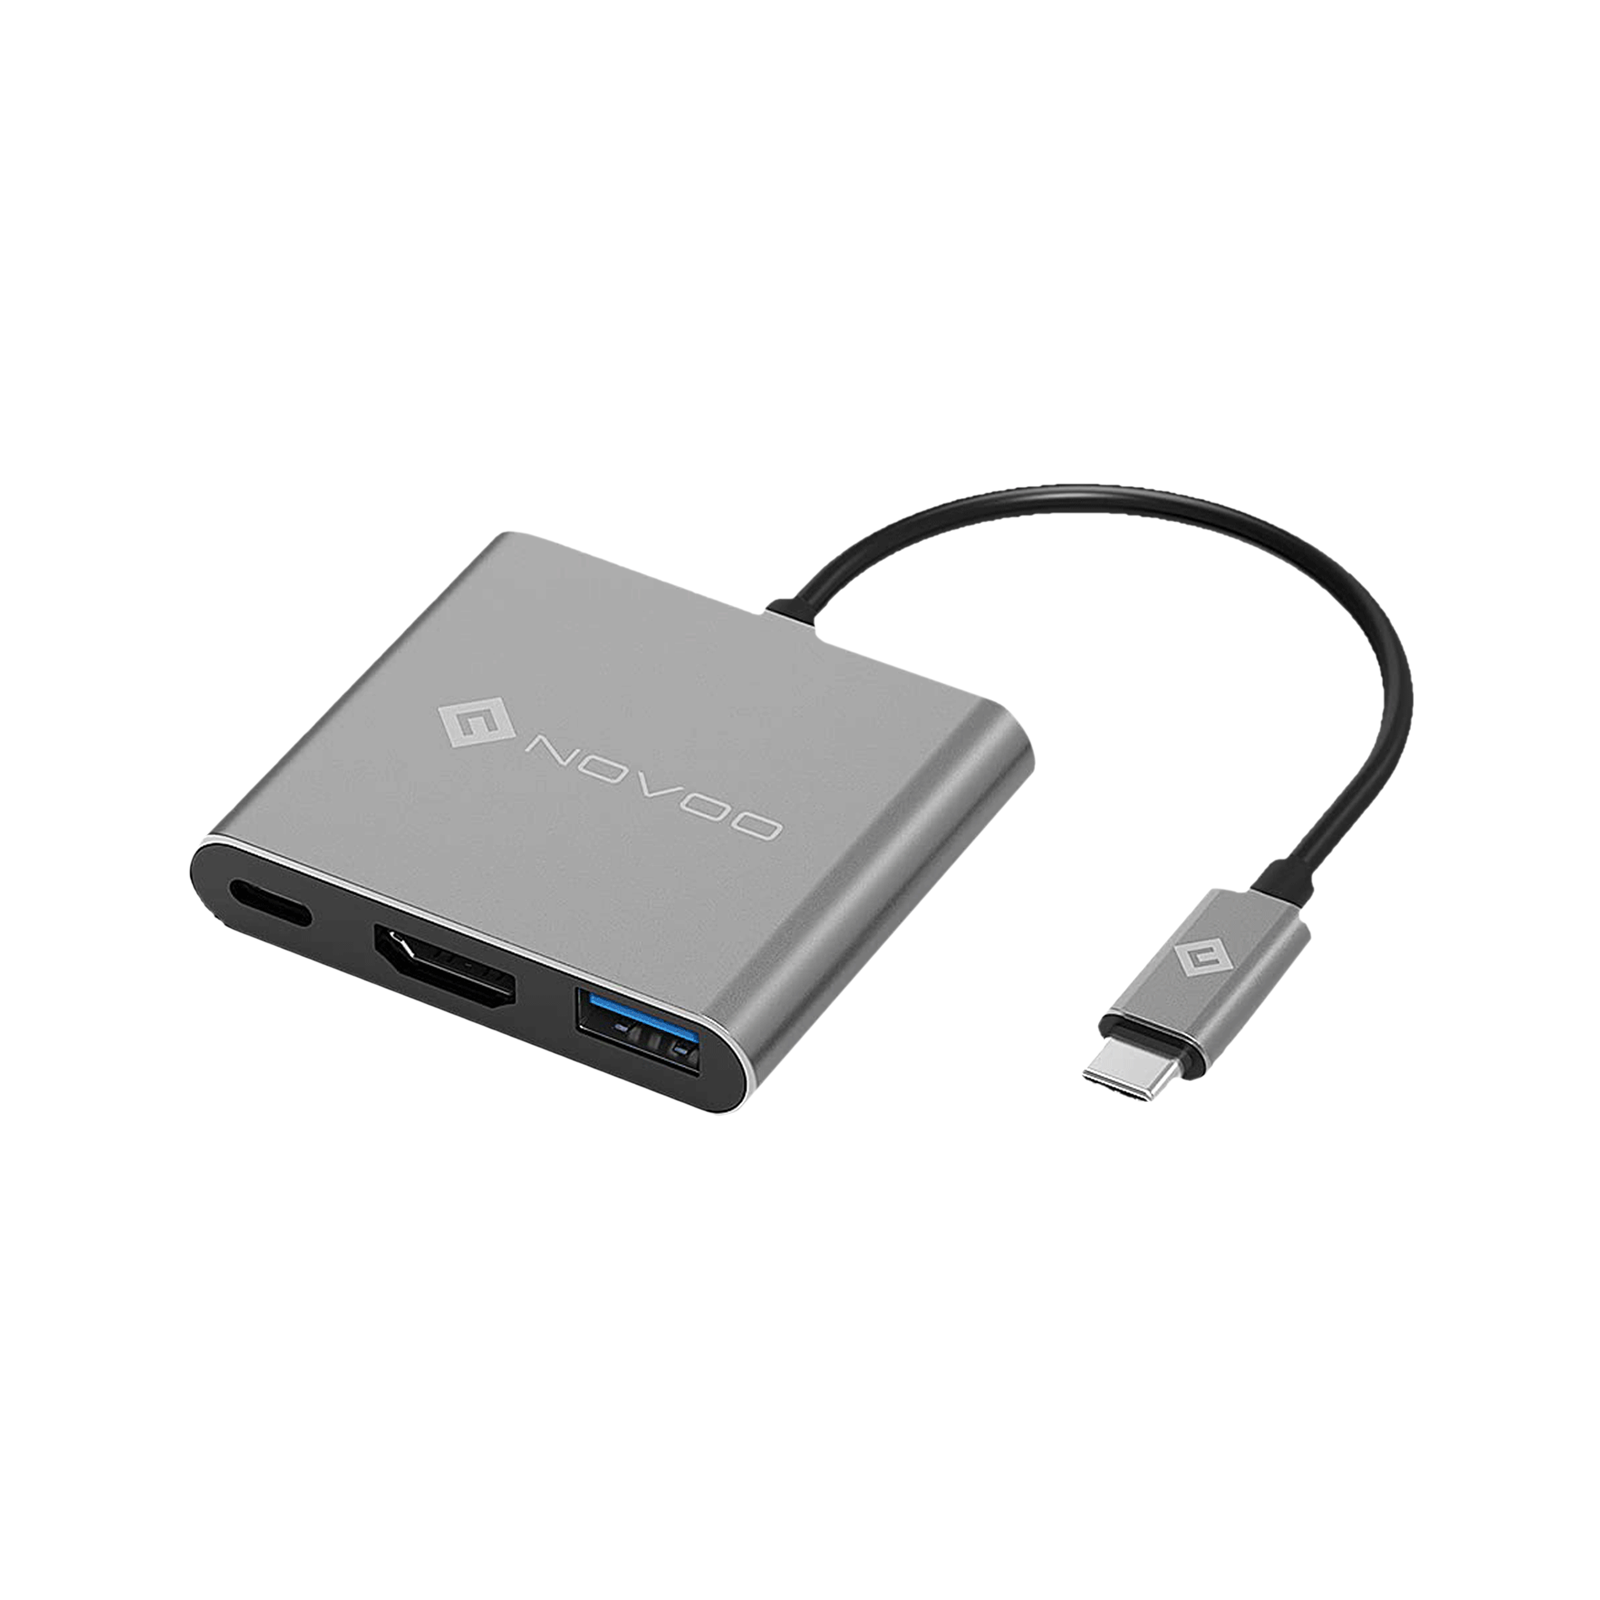 NOVOO 3-in-1 USB 3.0 Type C to USB 3.0 Type C, USB 3.0 Type A, HDMI Type A USB Hub (Supports 4K Resolution, Dark Grey)